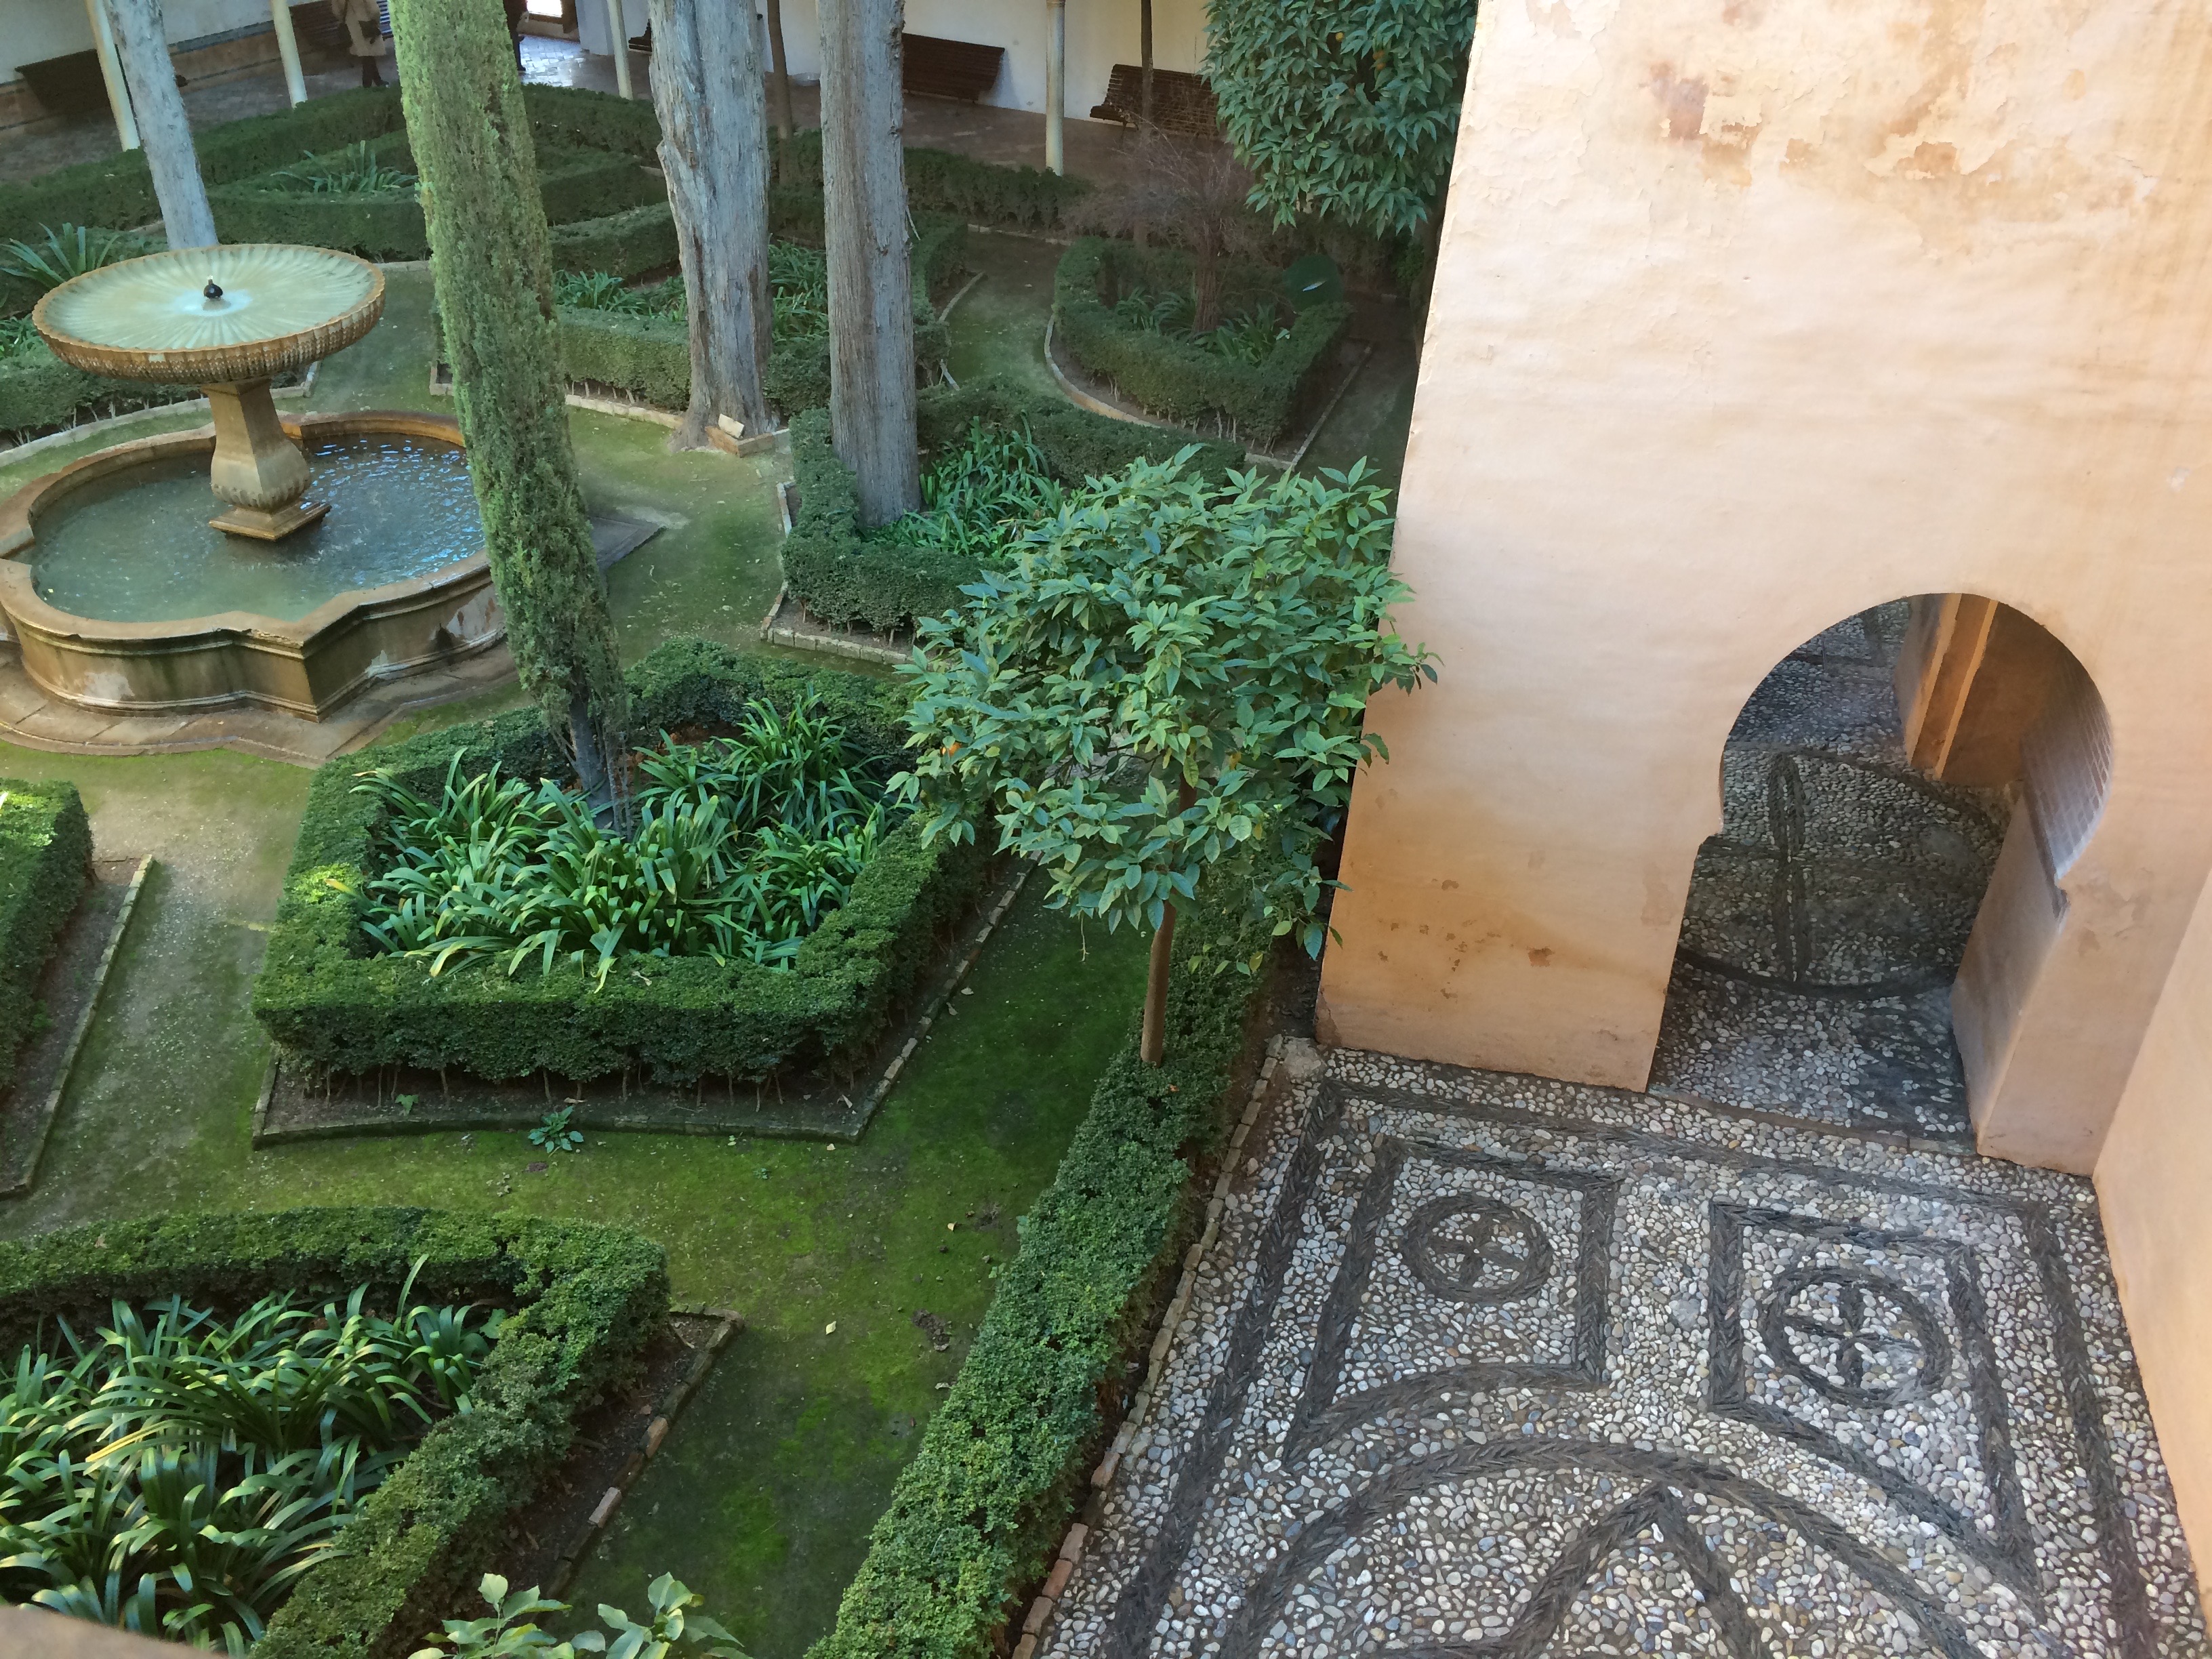 Alhambra Granada Spain - Nasrid Palaces garden